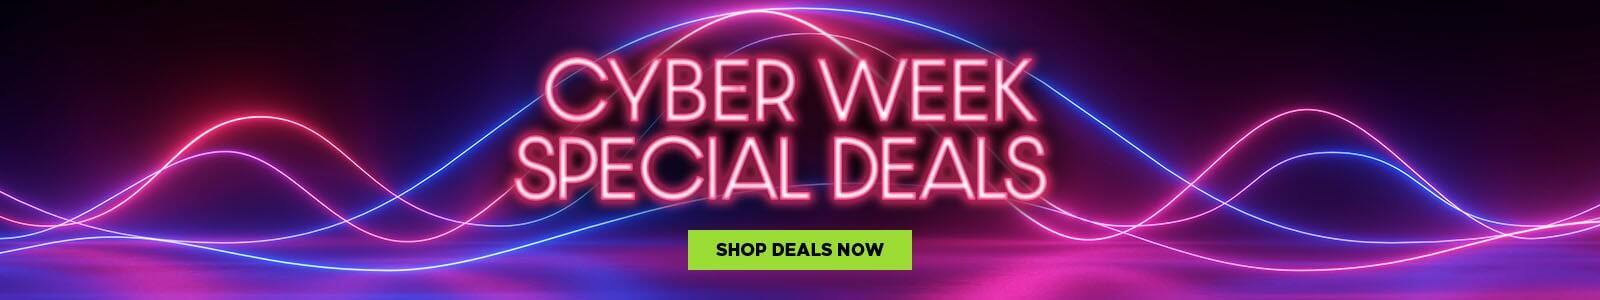 Cyber Week Special Deals. Shop Deals Now.